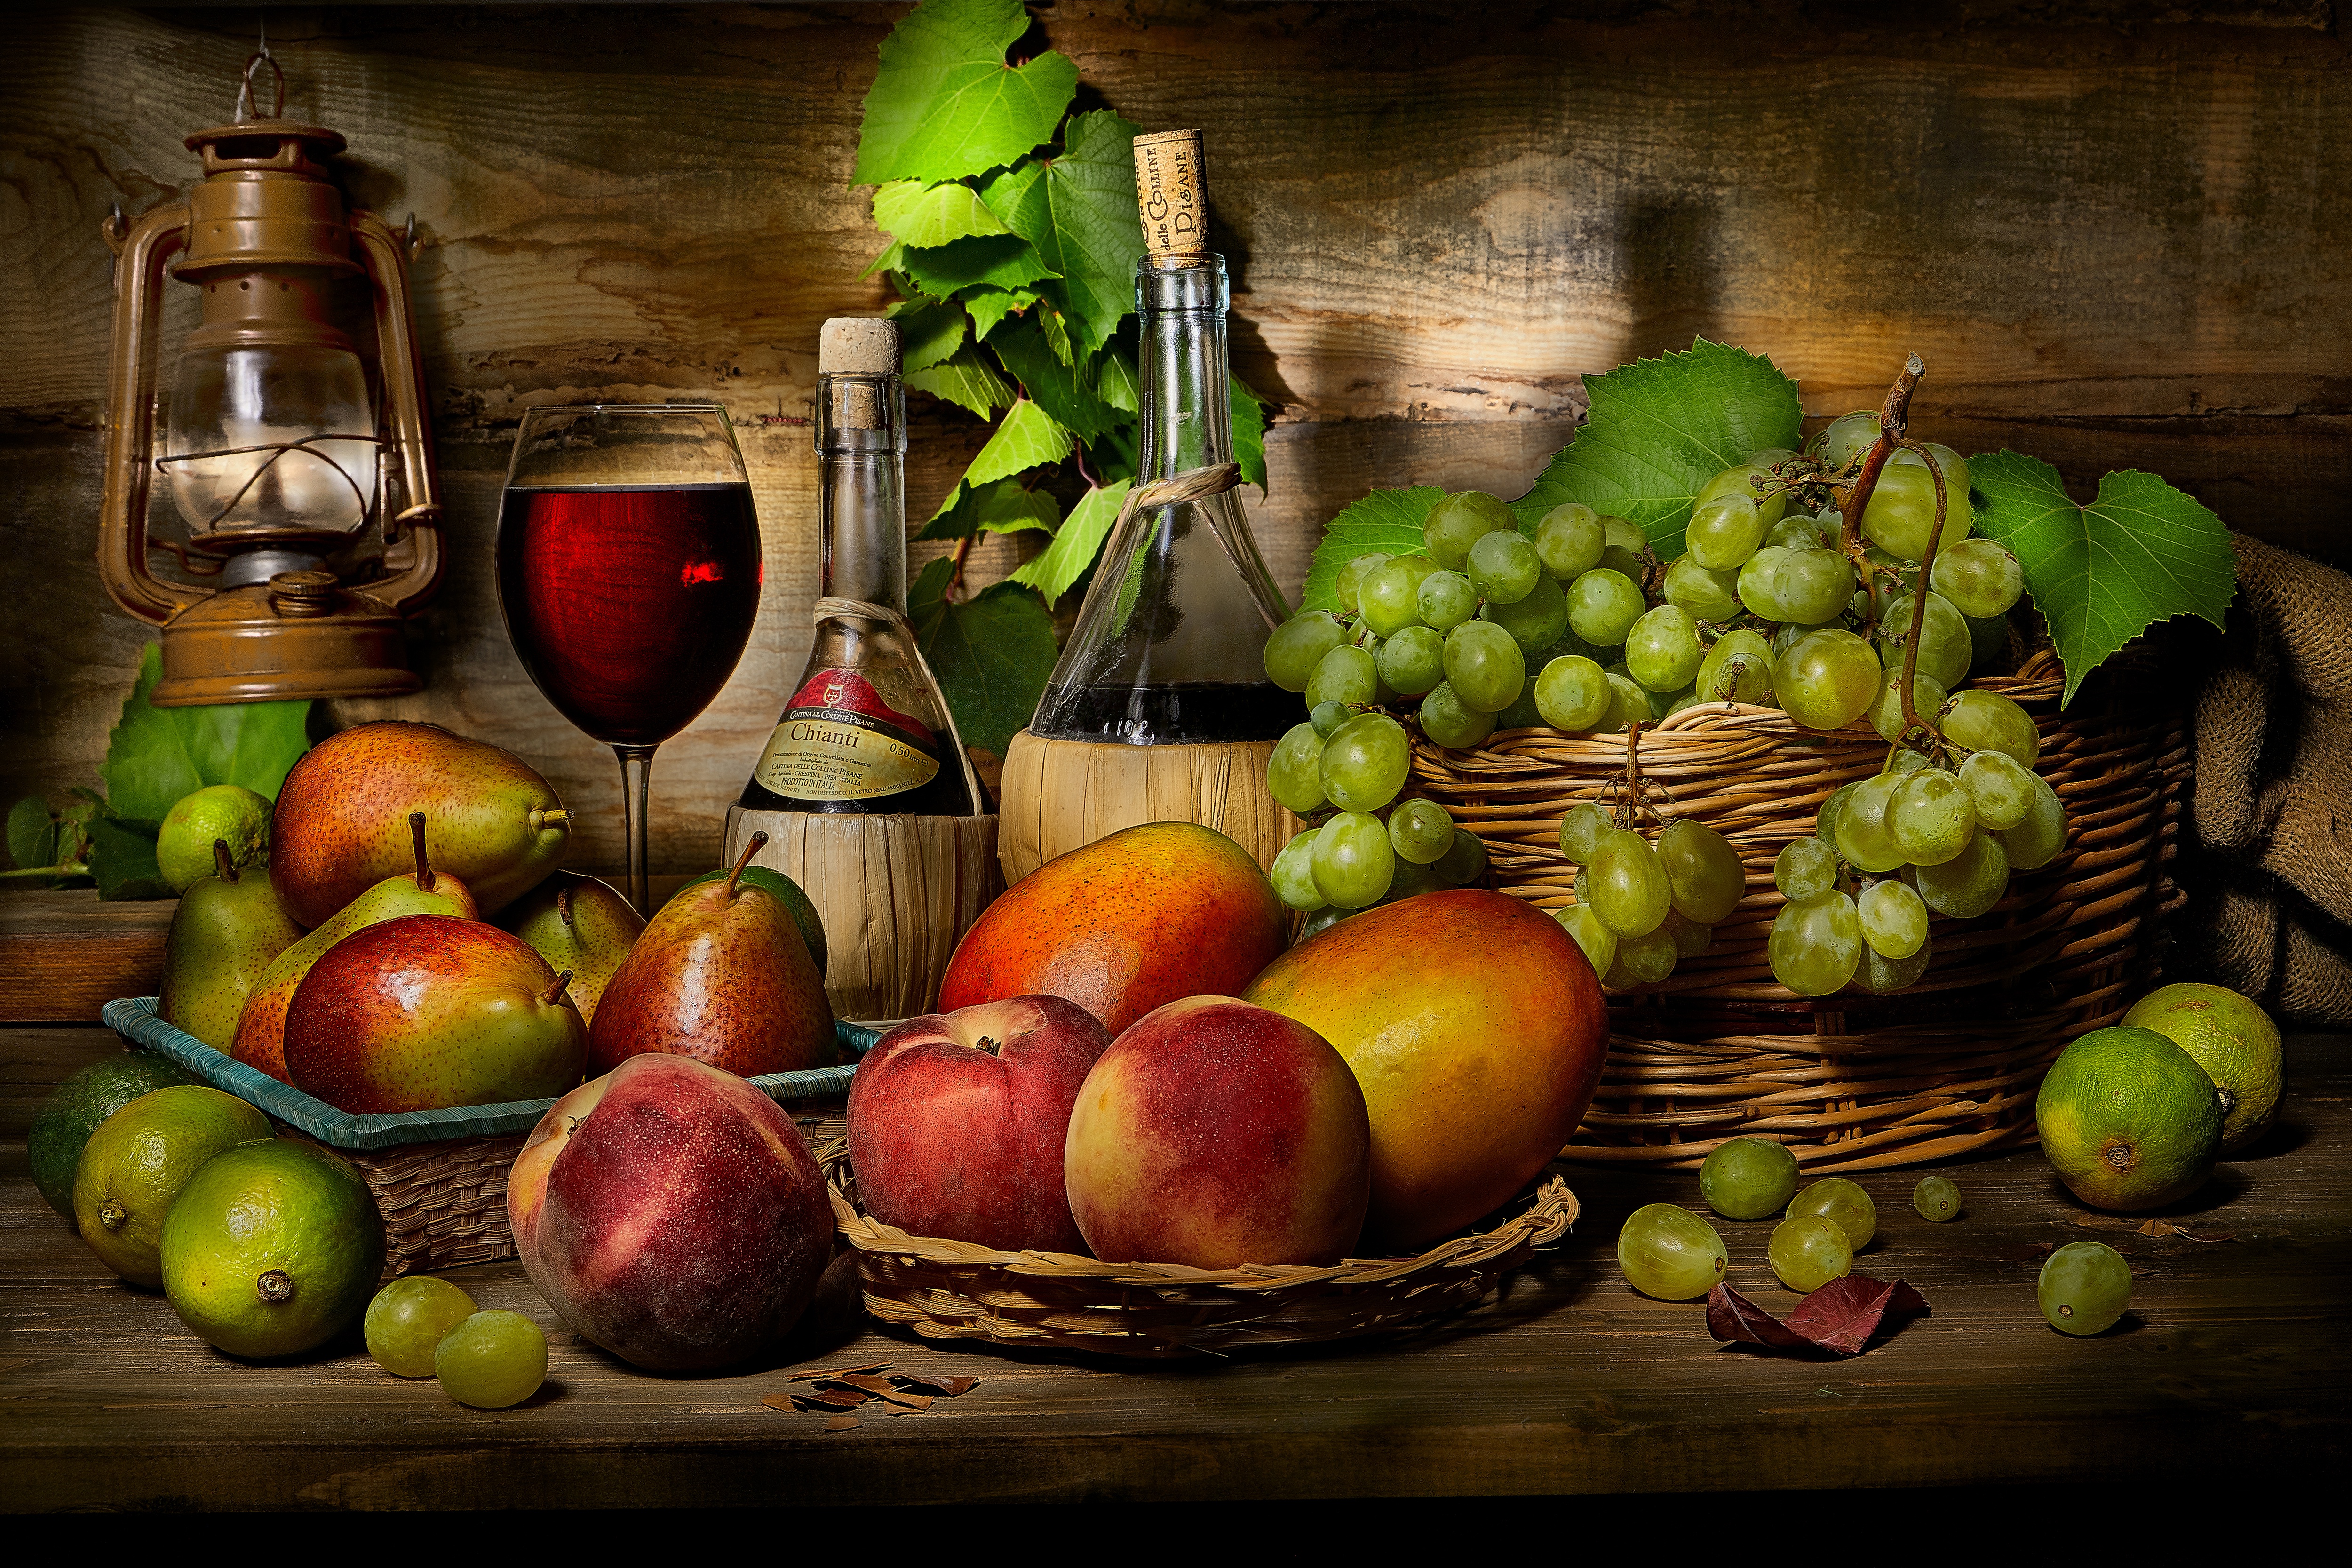 956516 descargar imagen alimento, bodegón, botella, fruta, uva, mango, pera, vino: fondos de pantalla y protectores de pantalla gratis